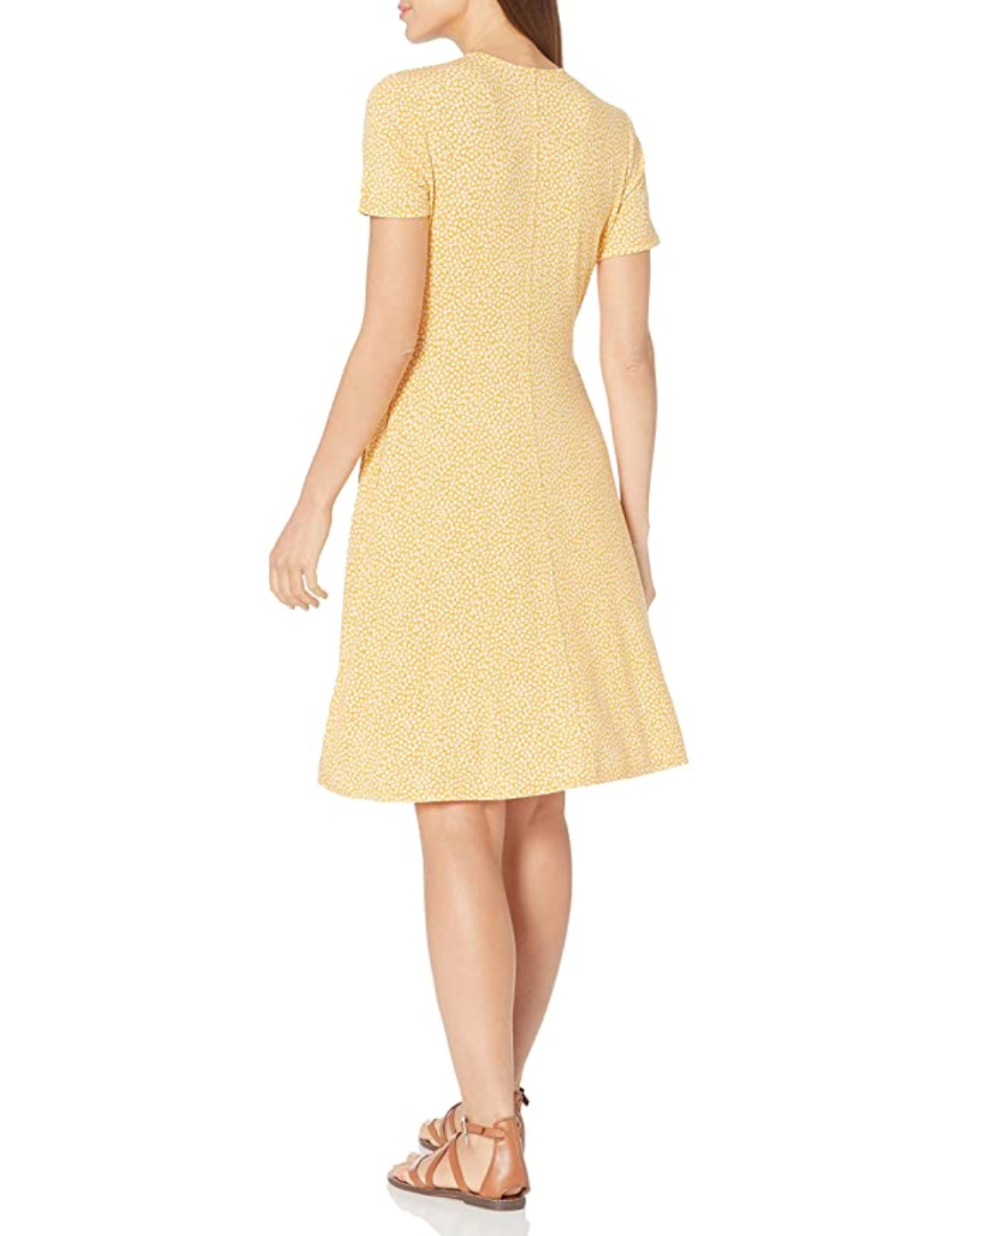 Amazon Essentials Women's Cap-Sleeve Faux-wrap Dress